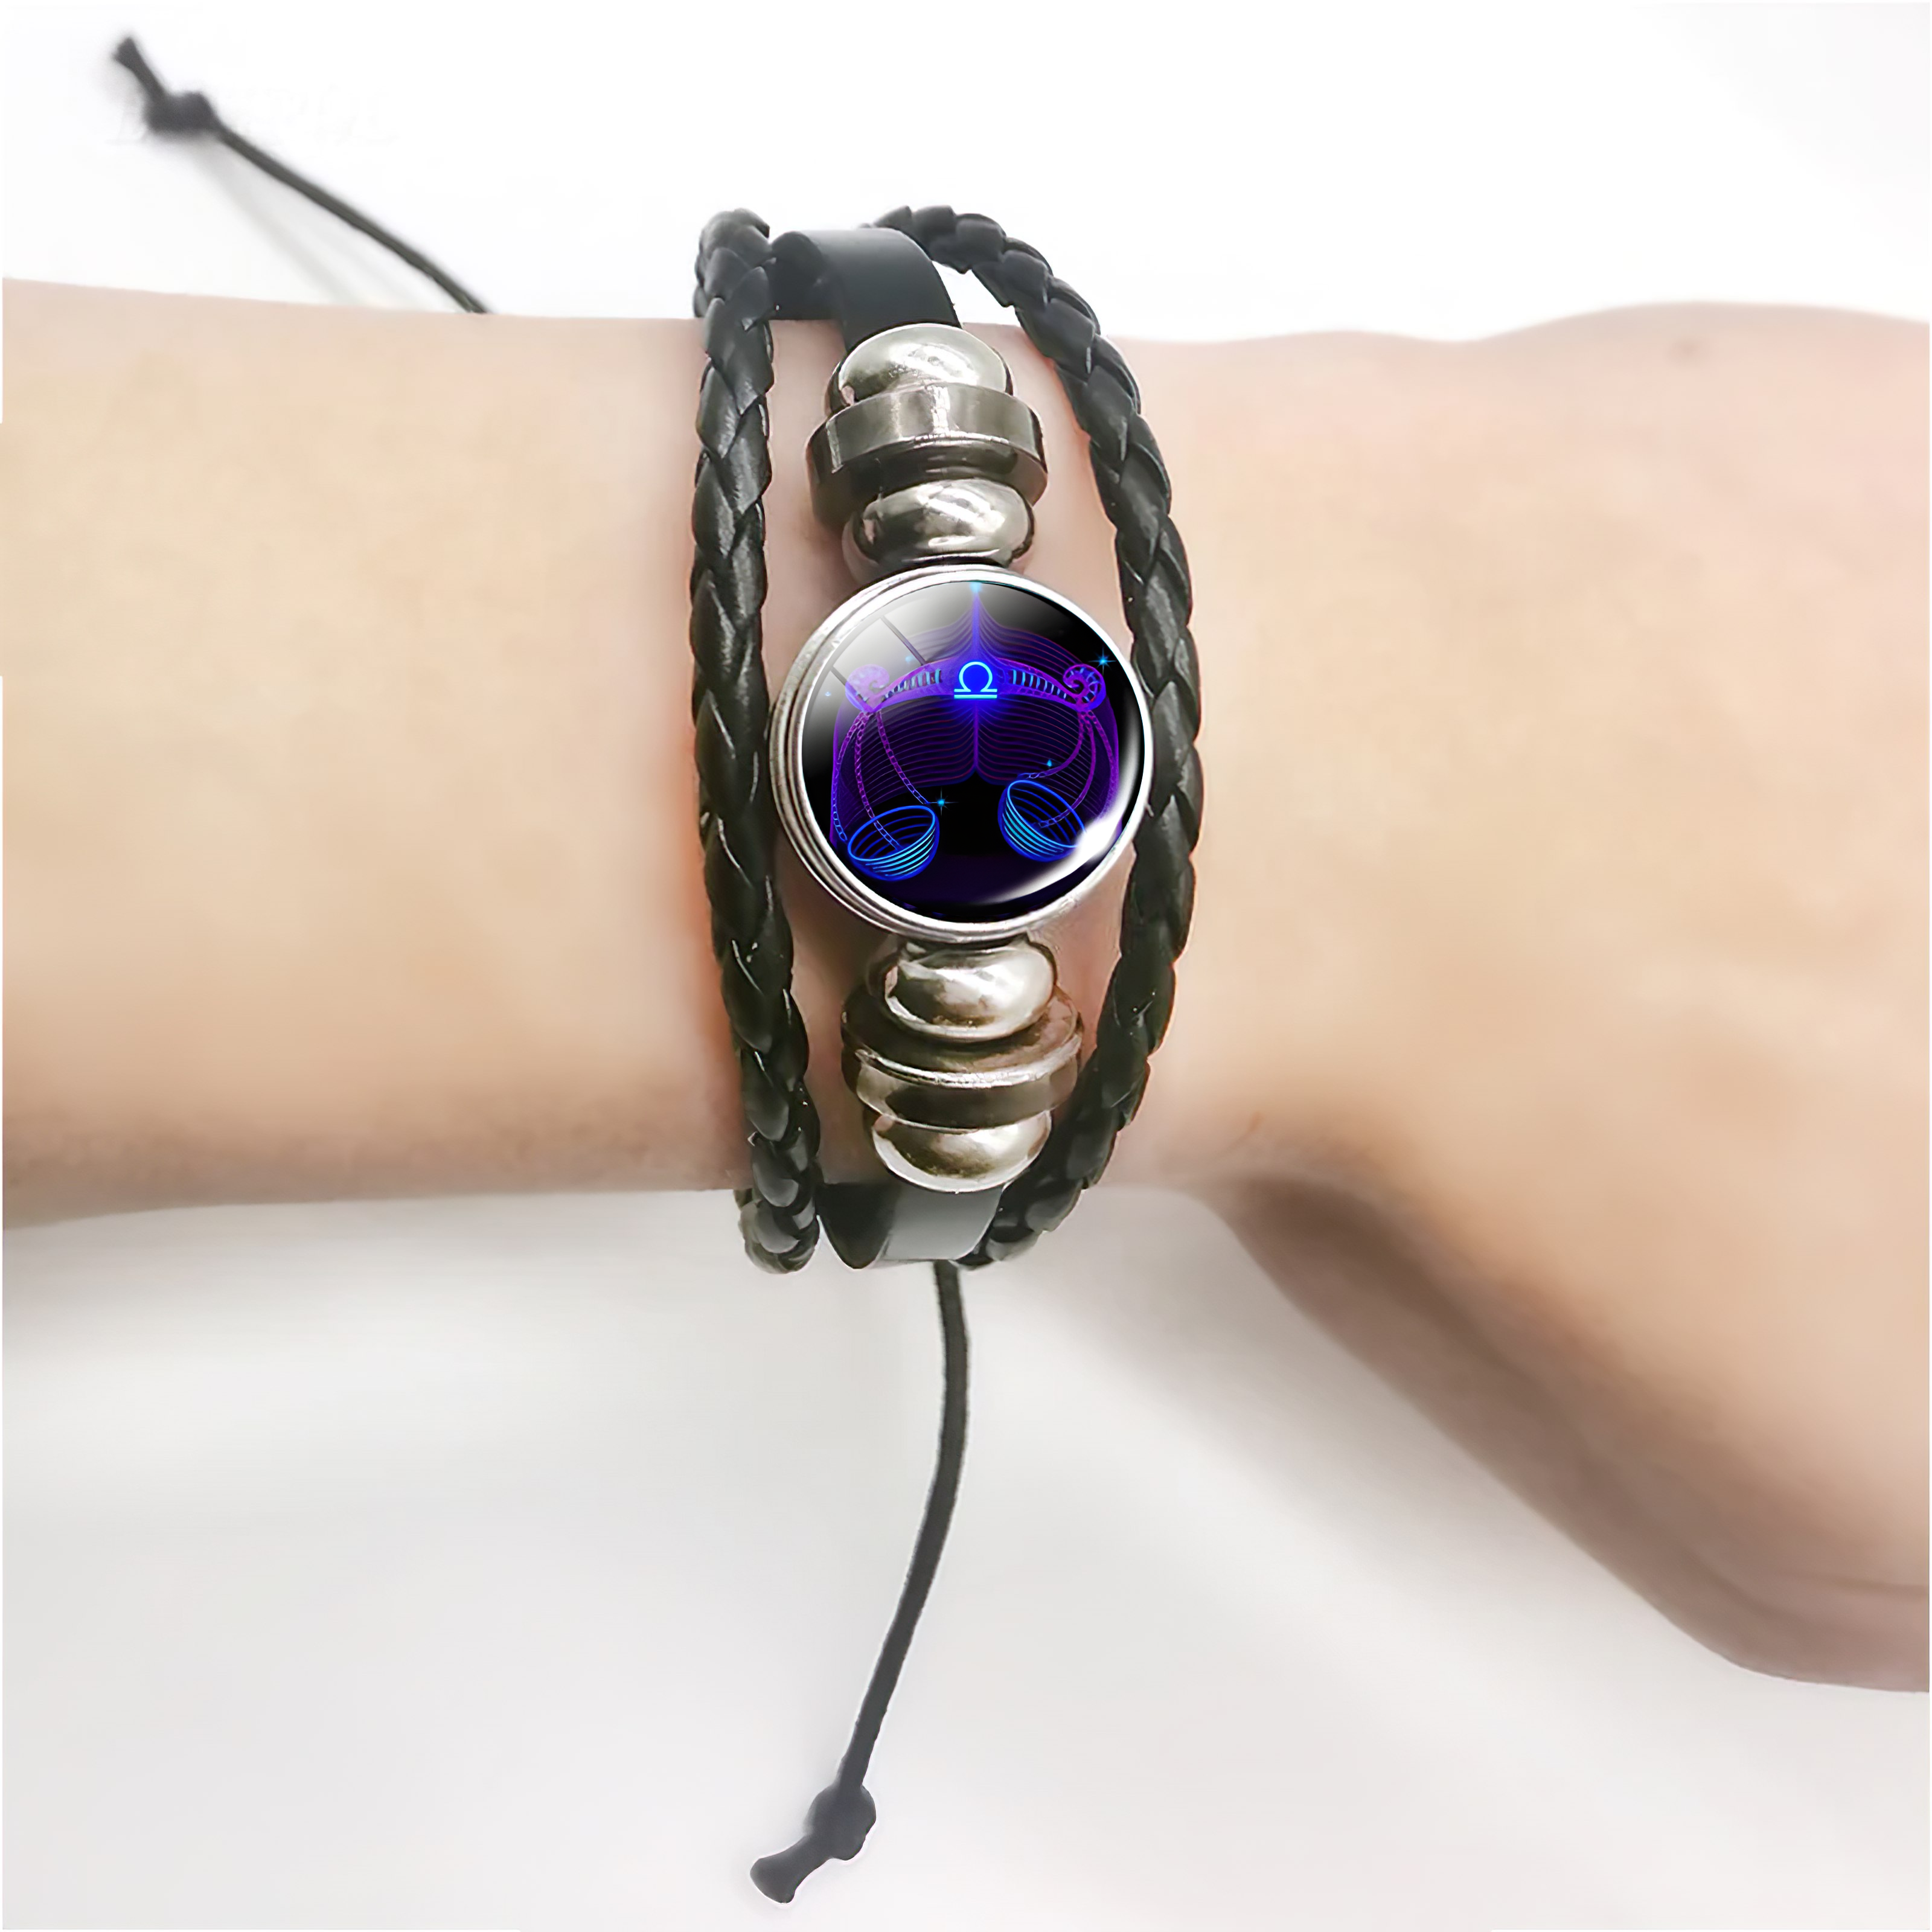 Personalised Wrist Watch With Zodiac Design - GiftsOnline4U